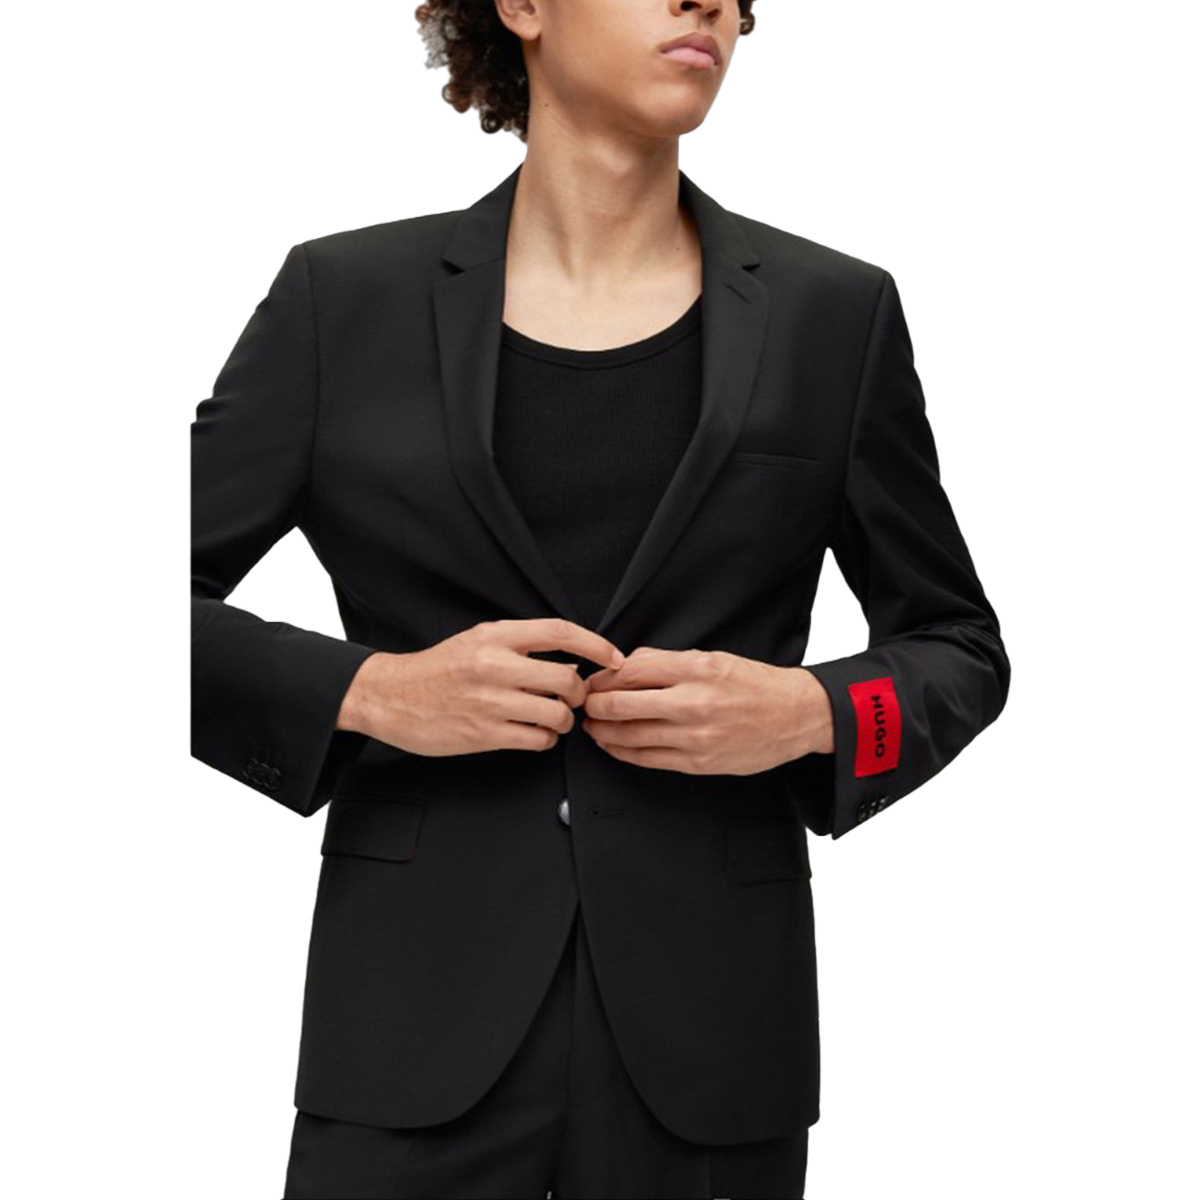 Extra-Slim-Fit Suit In A Super-Flex Wool Blend